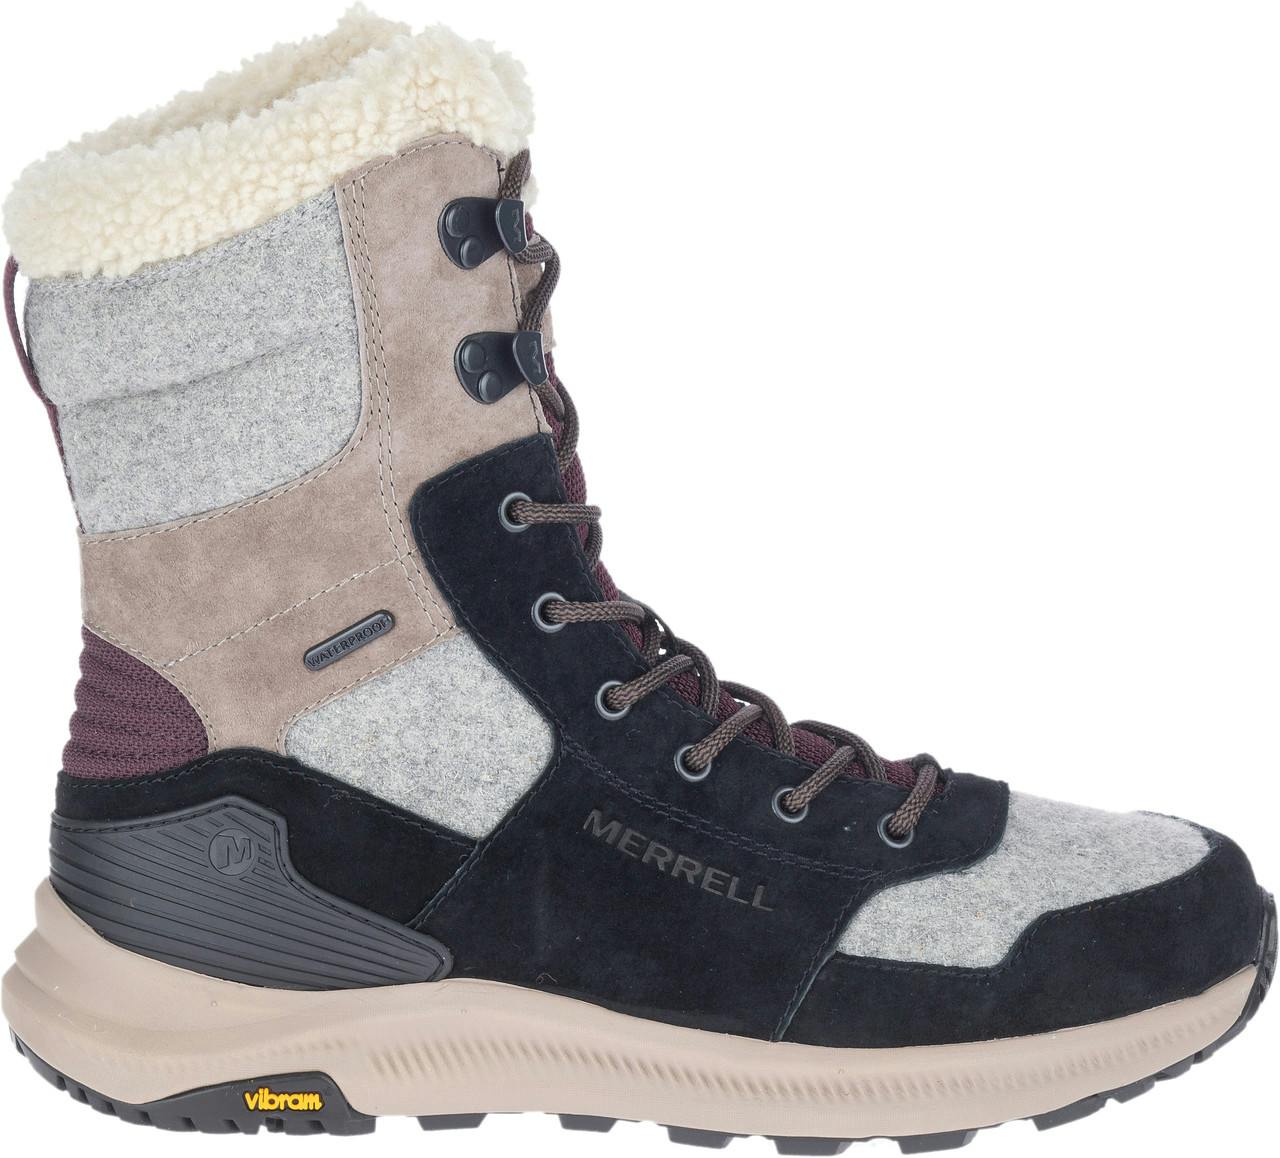 Ontario Tall Polar Waterproof Winter Boots Black/Falcon